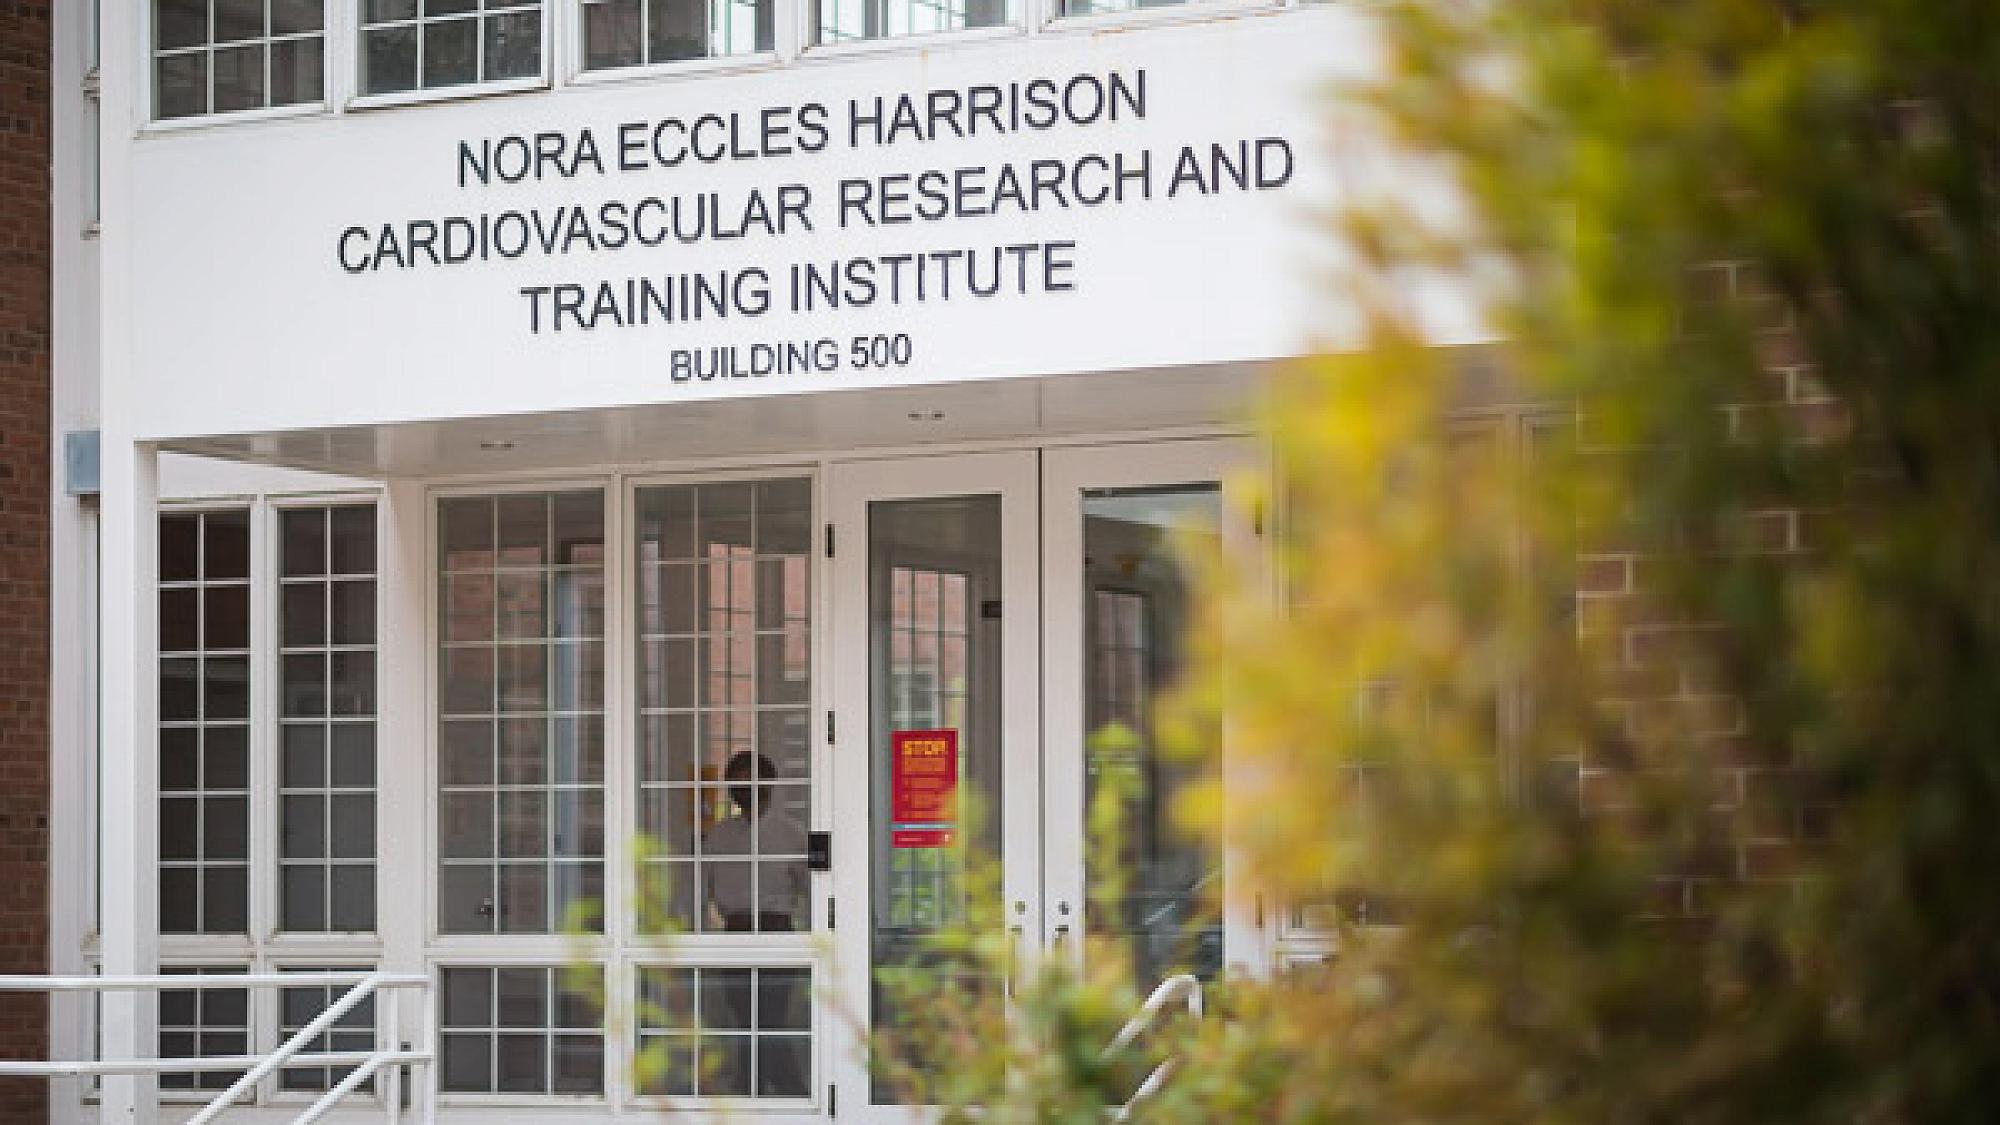 CVRTI Nora Eccles Harrison Cardiovascular Research & Training Institute Building